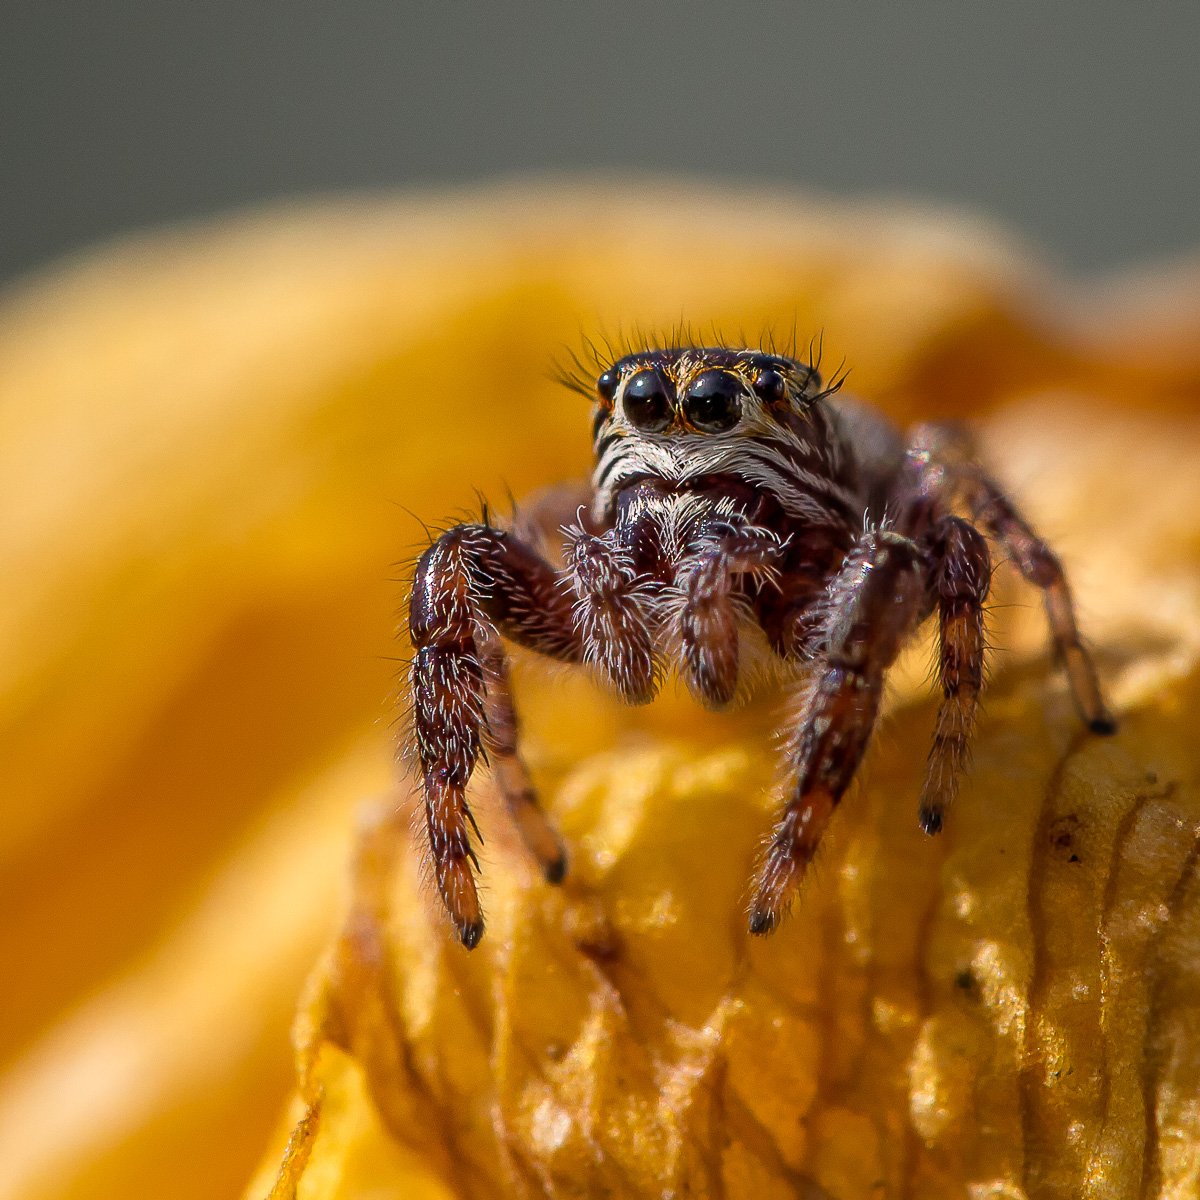 Araignée saltice macaroeris nidicolens posant sur une fleur jaune.